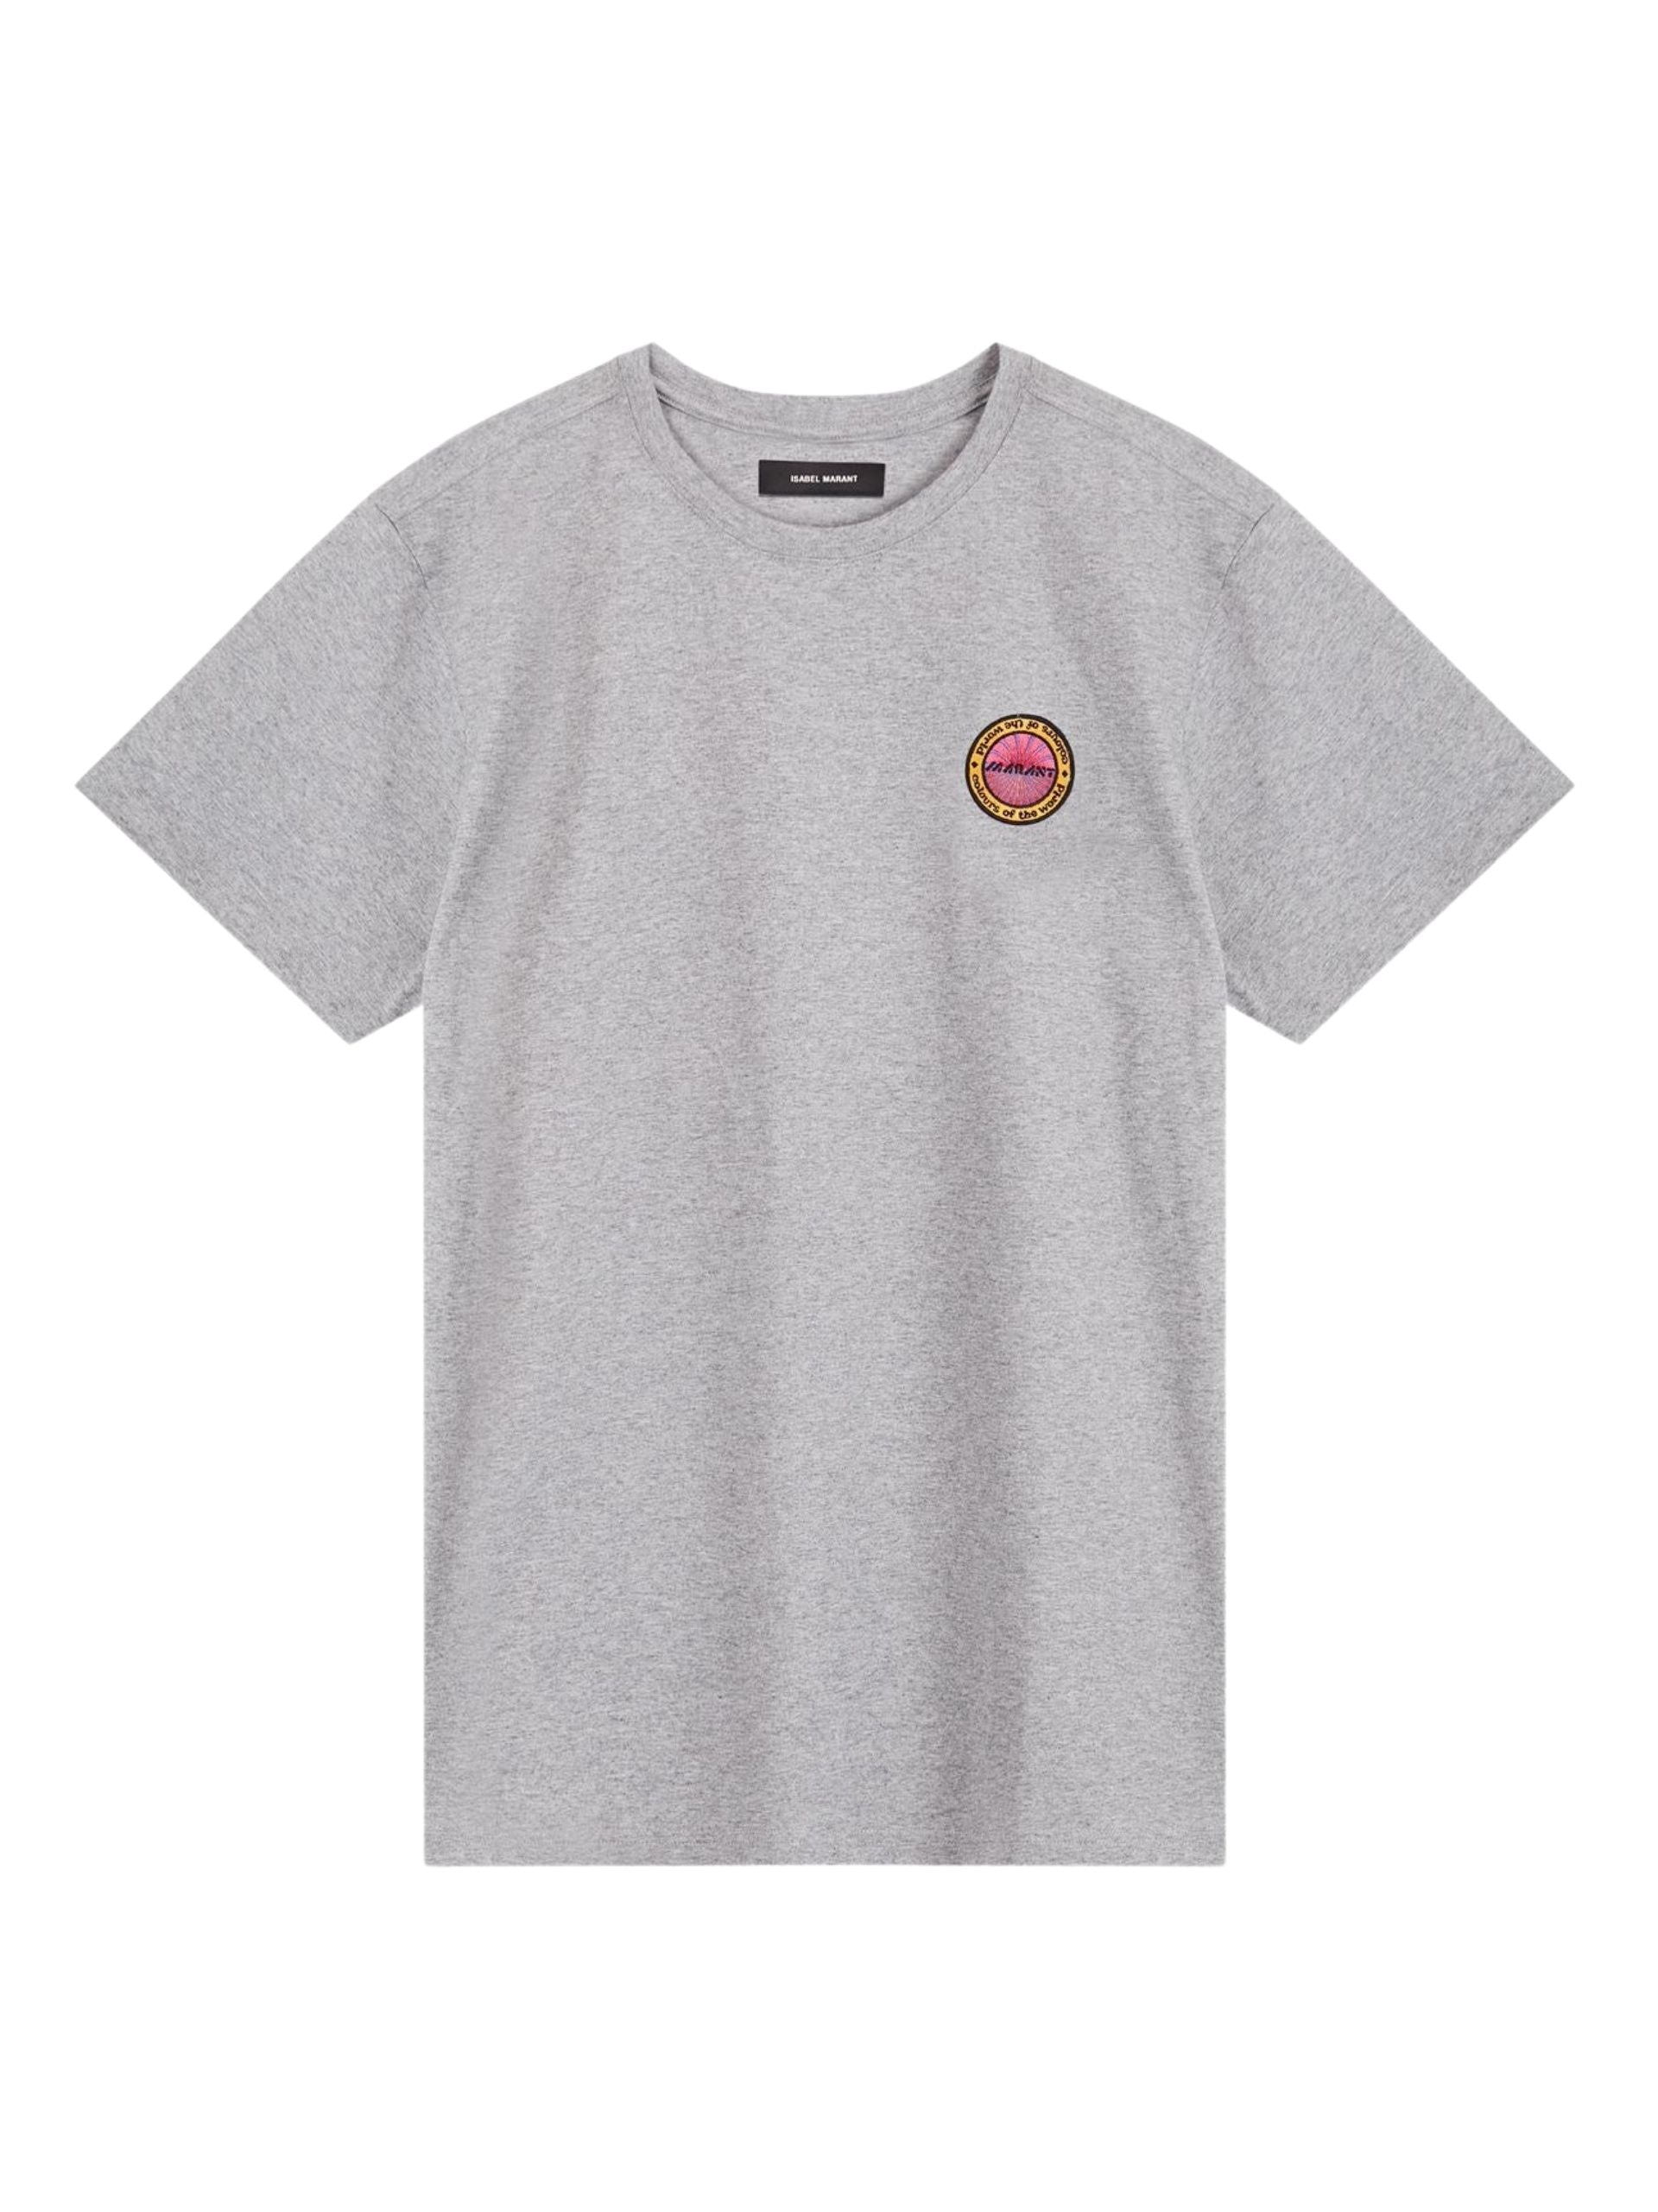 Annaxou T-Shirt / Grey Womens Isabel Marant 